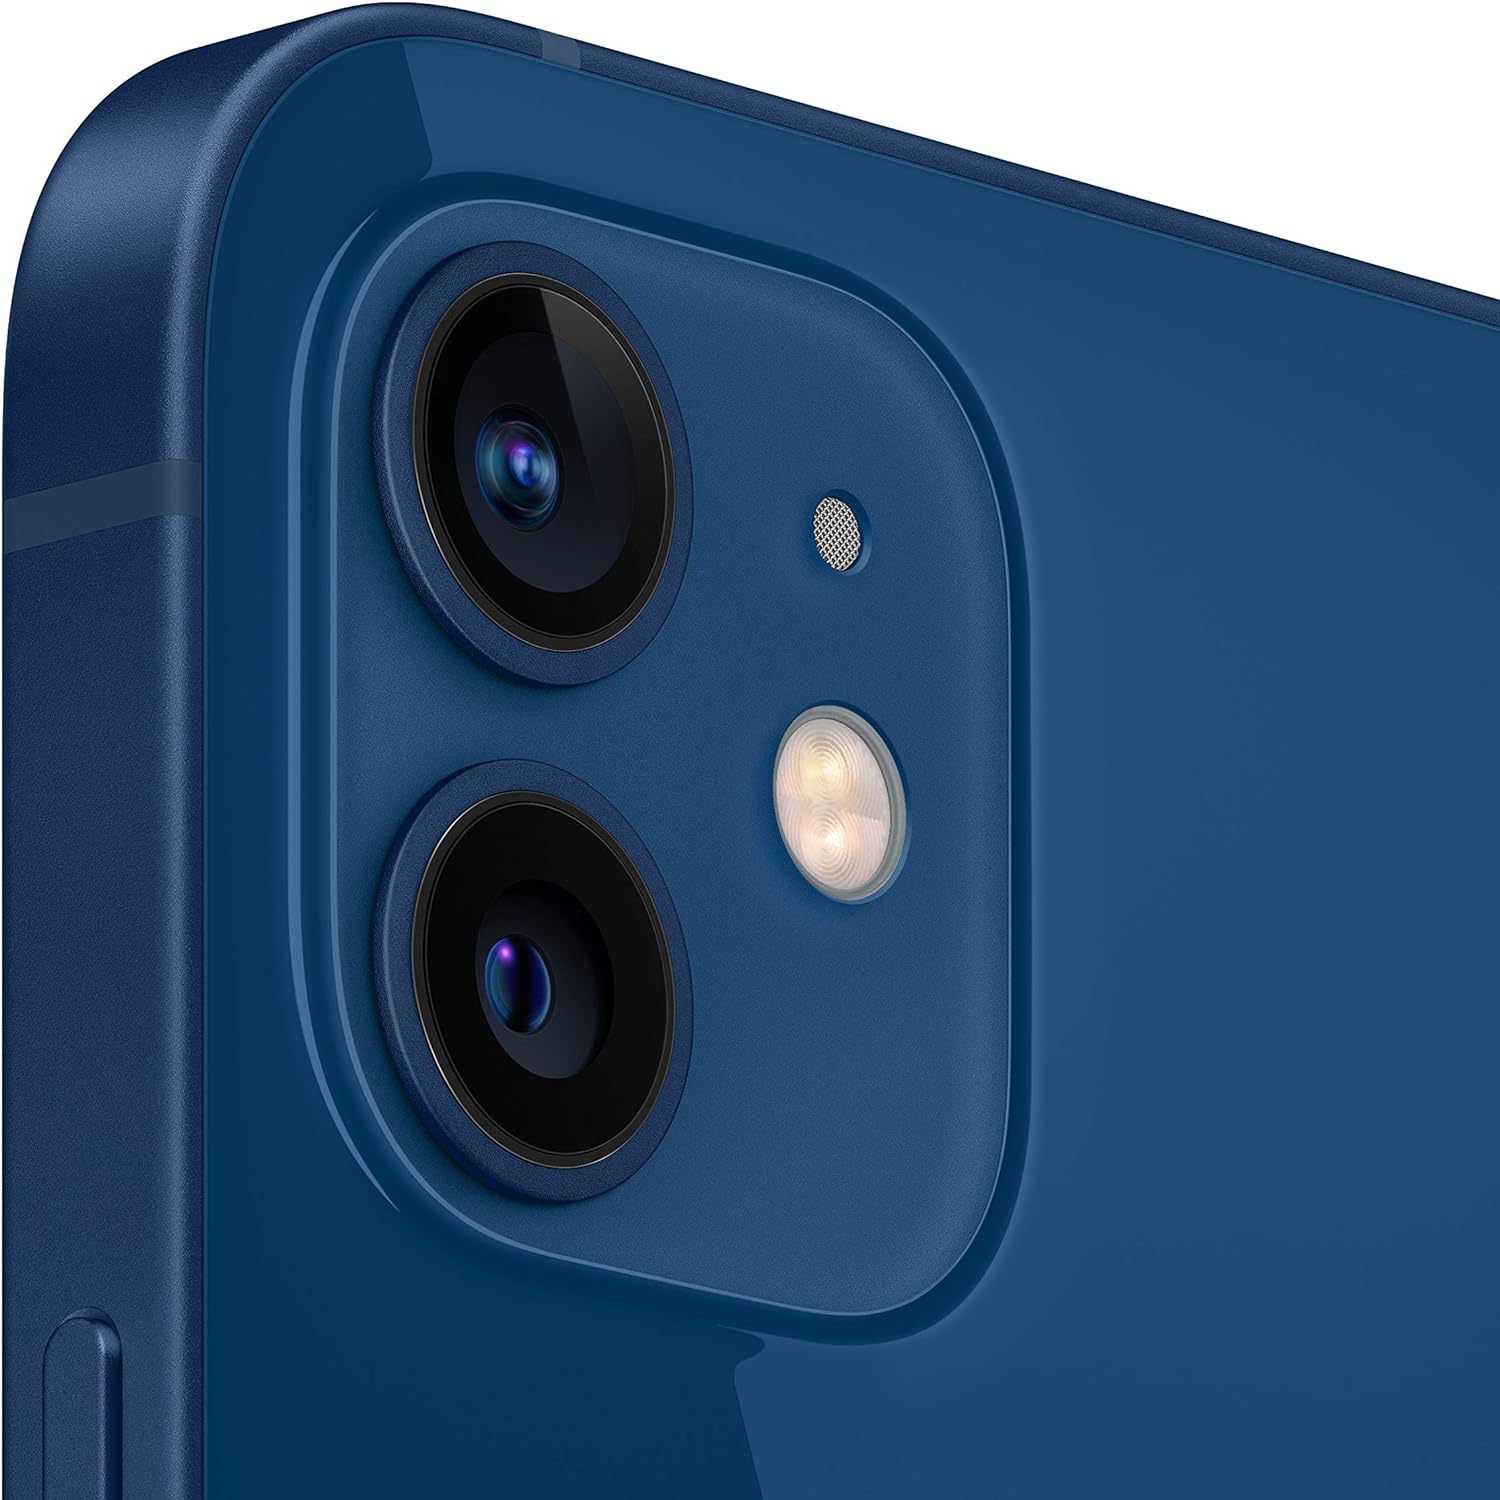 Apple iPhone 12 (128GB) - Blue (Renewed)